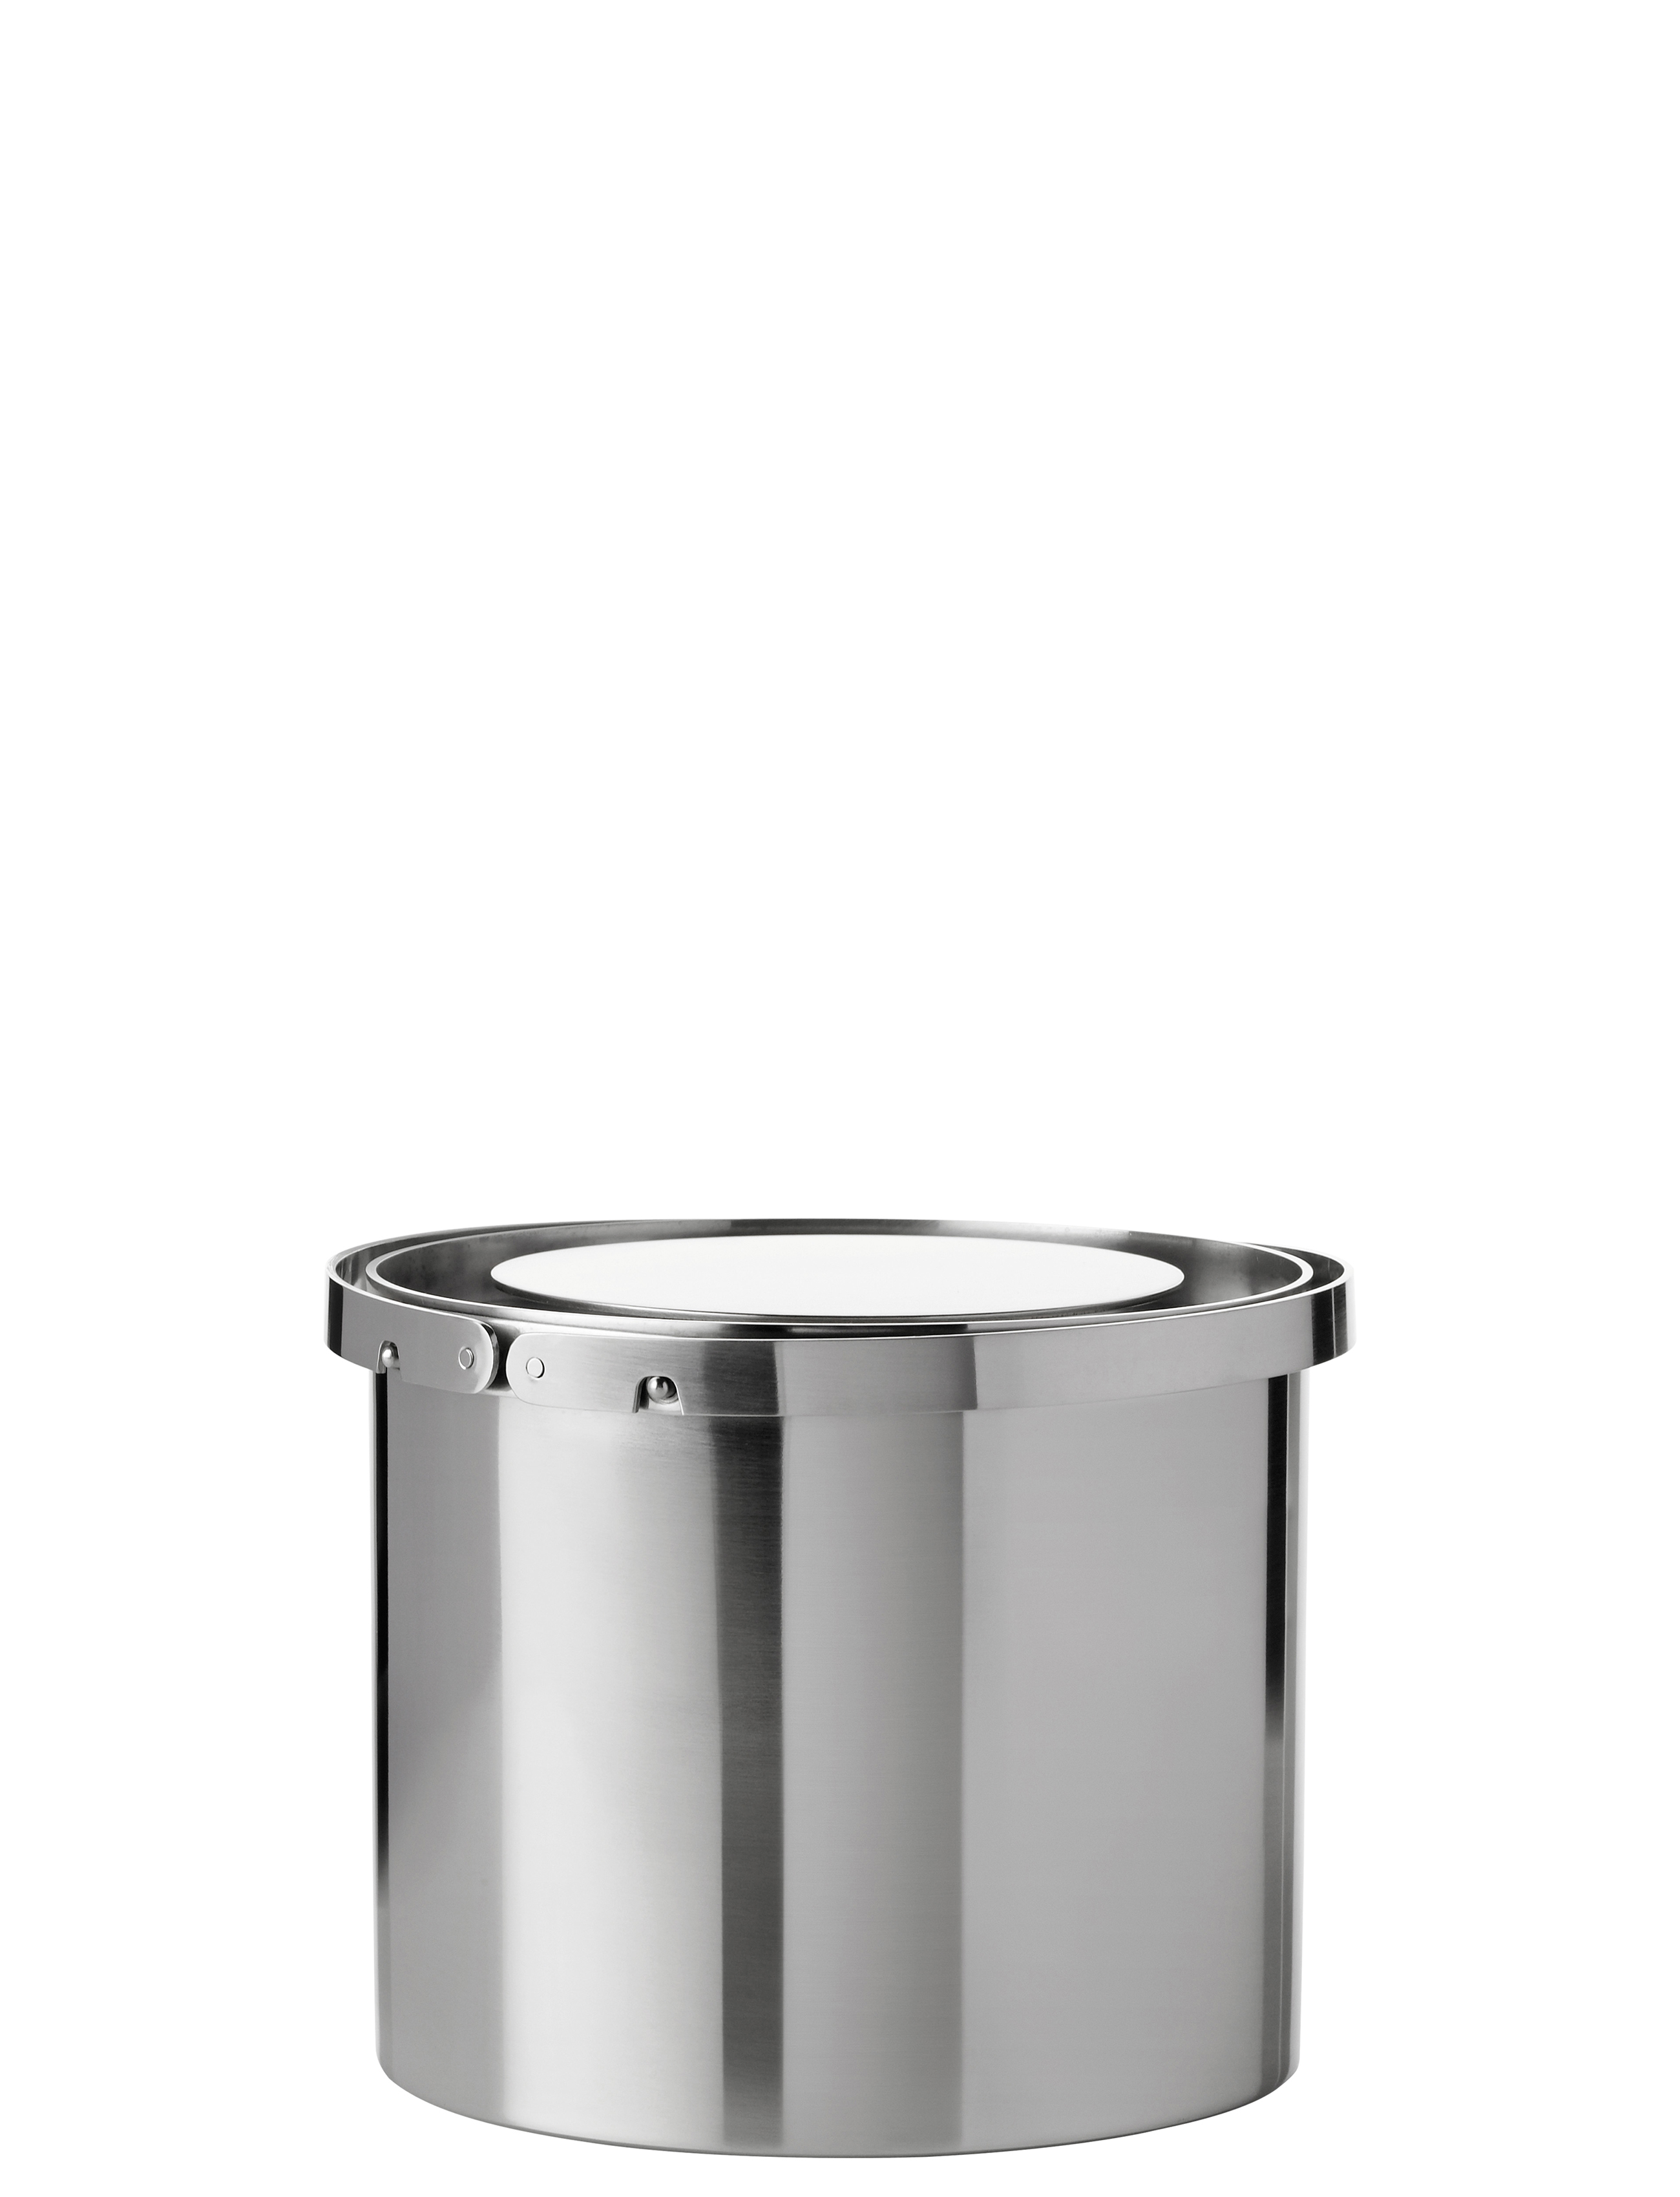 Stelton - Arne Jacobsen Ice Bucket 1 L (05-1)